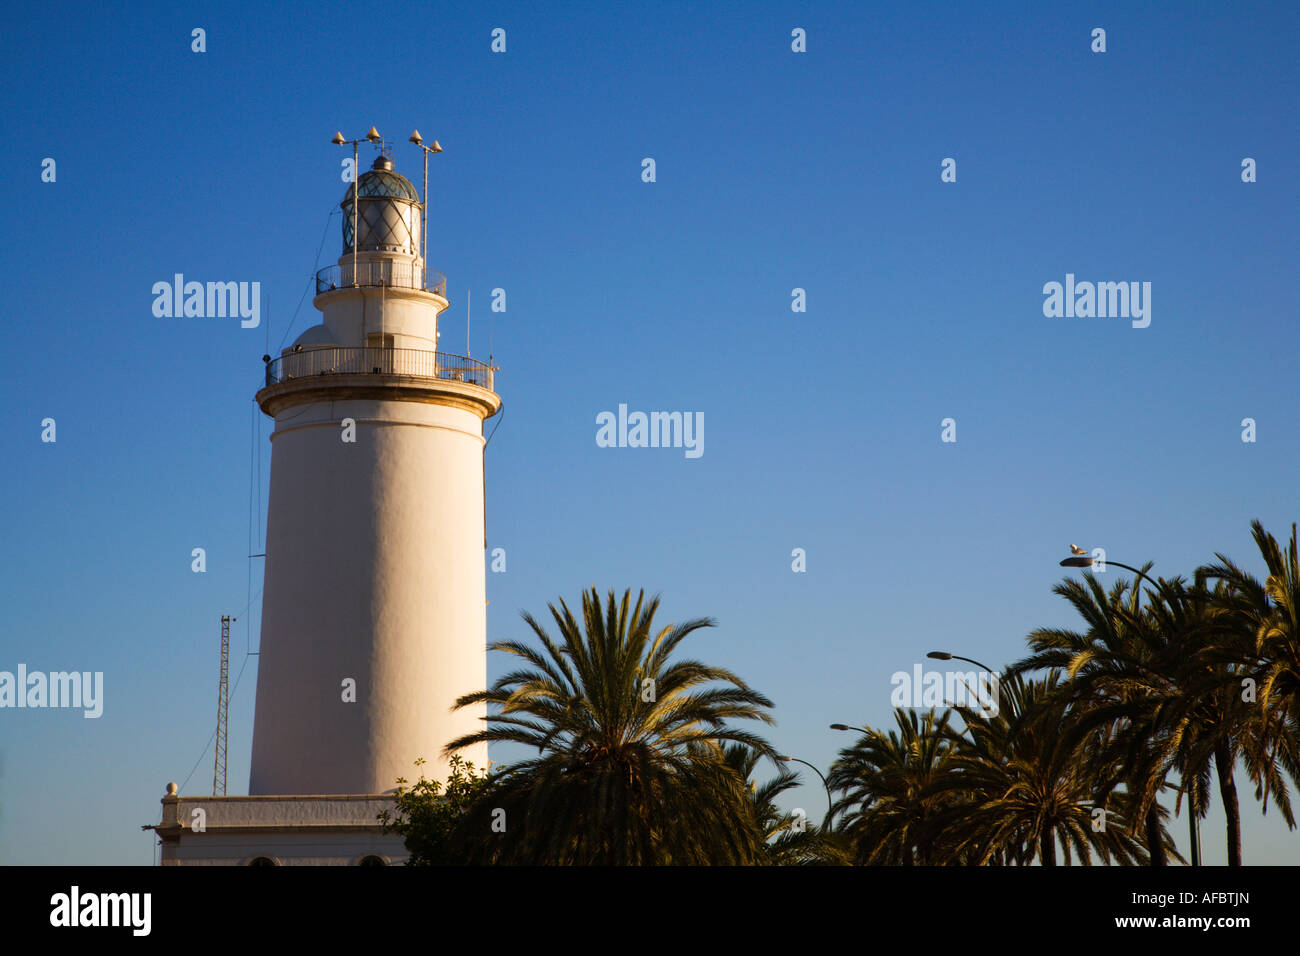 The Lighthouse at Malaga Spain Stock Photo